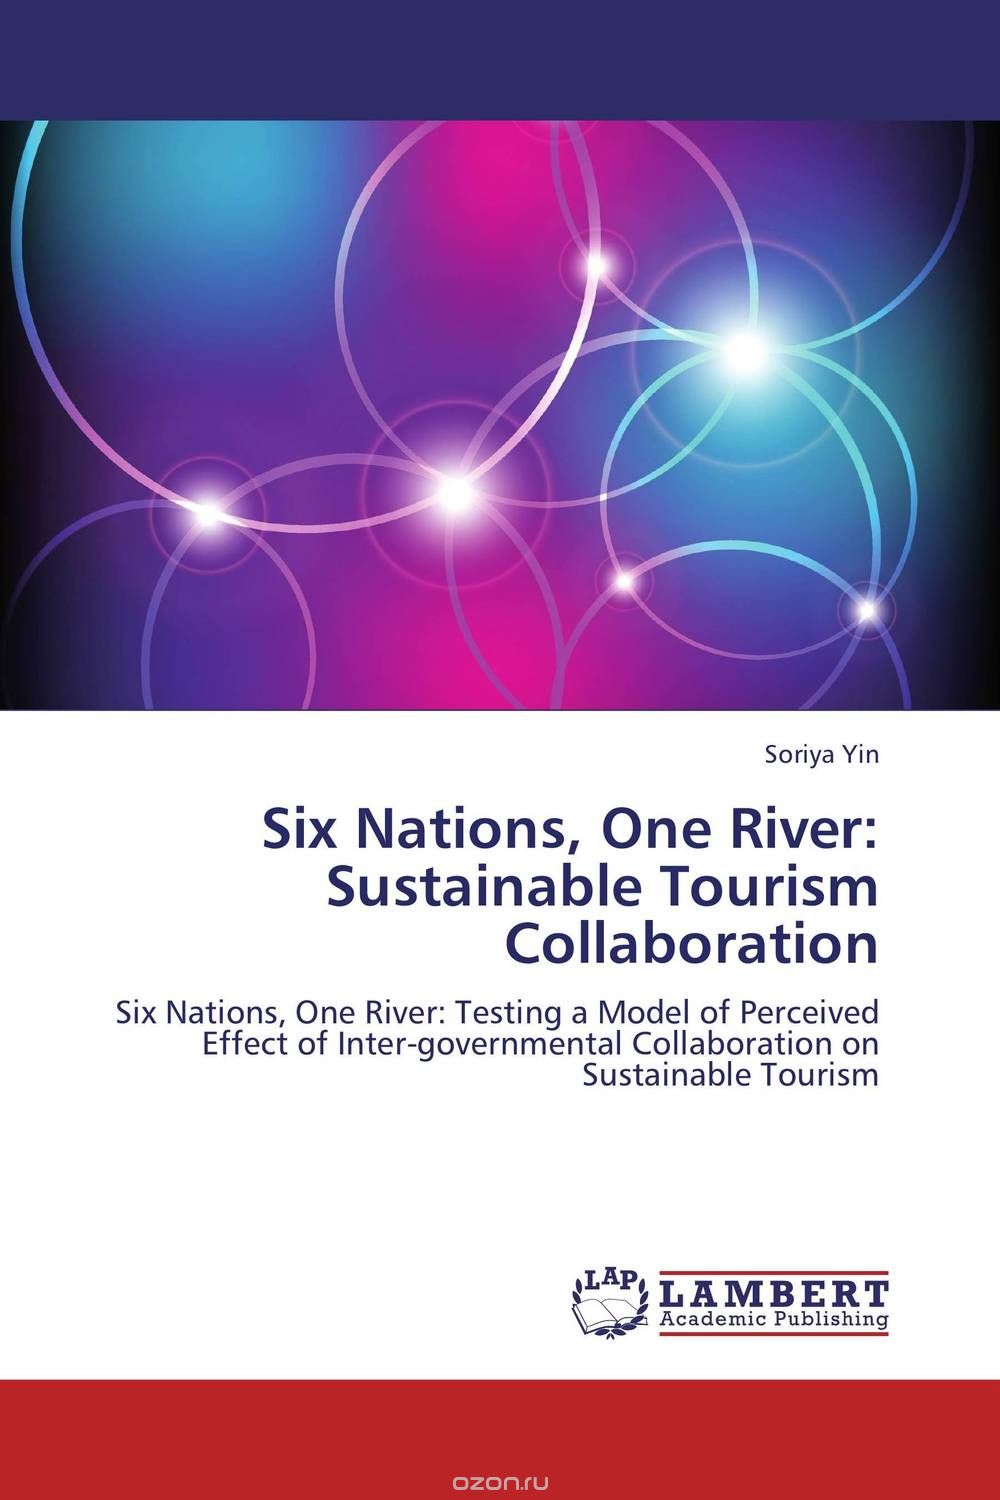 Скачать книгу "Six Nations, One River: Sustainable Tourism Collaboration"